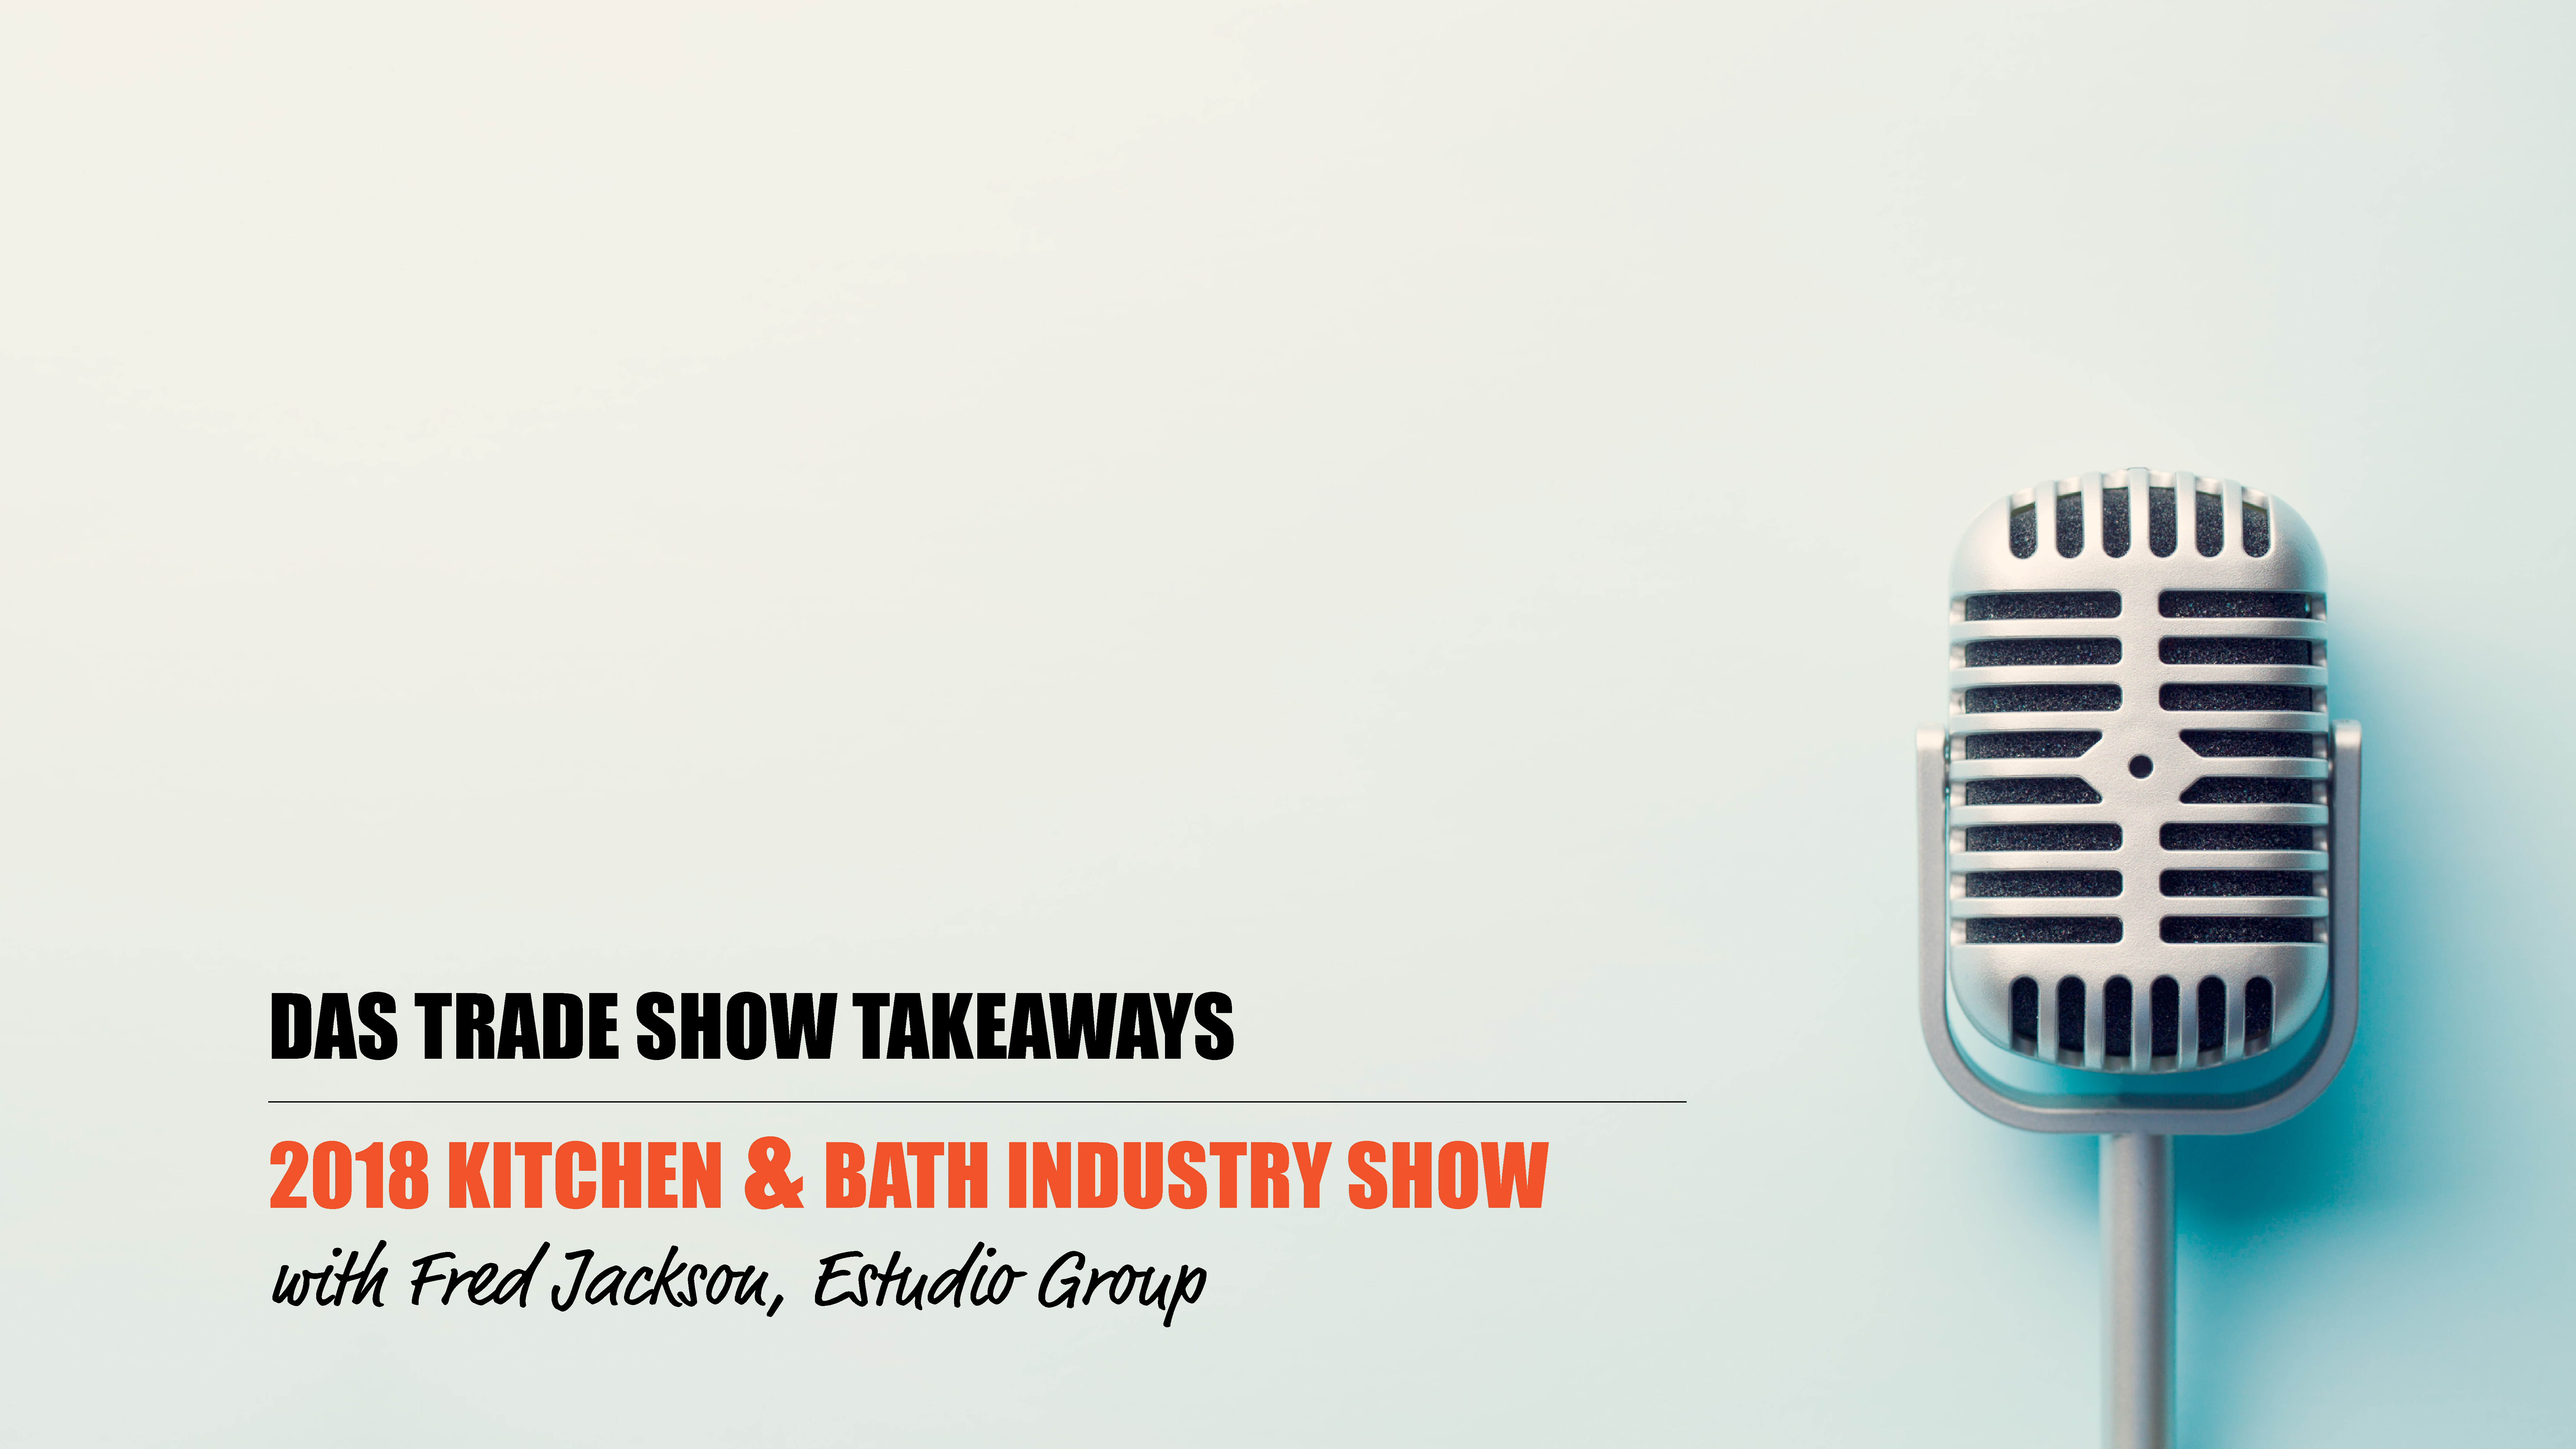 2018 Kitchen & Bath Industry Show Takeaways